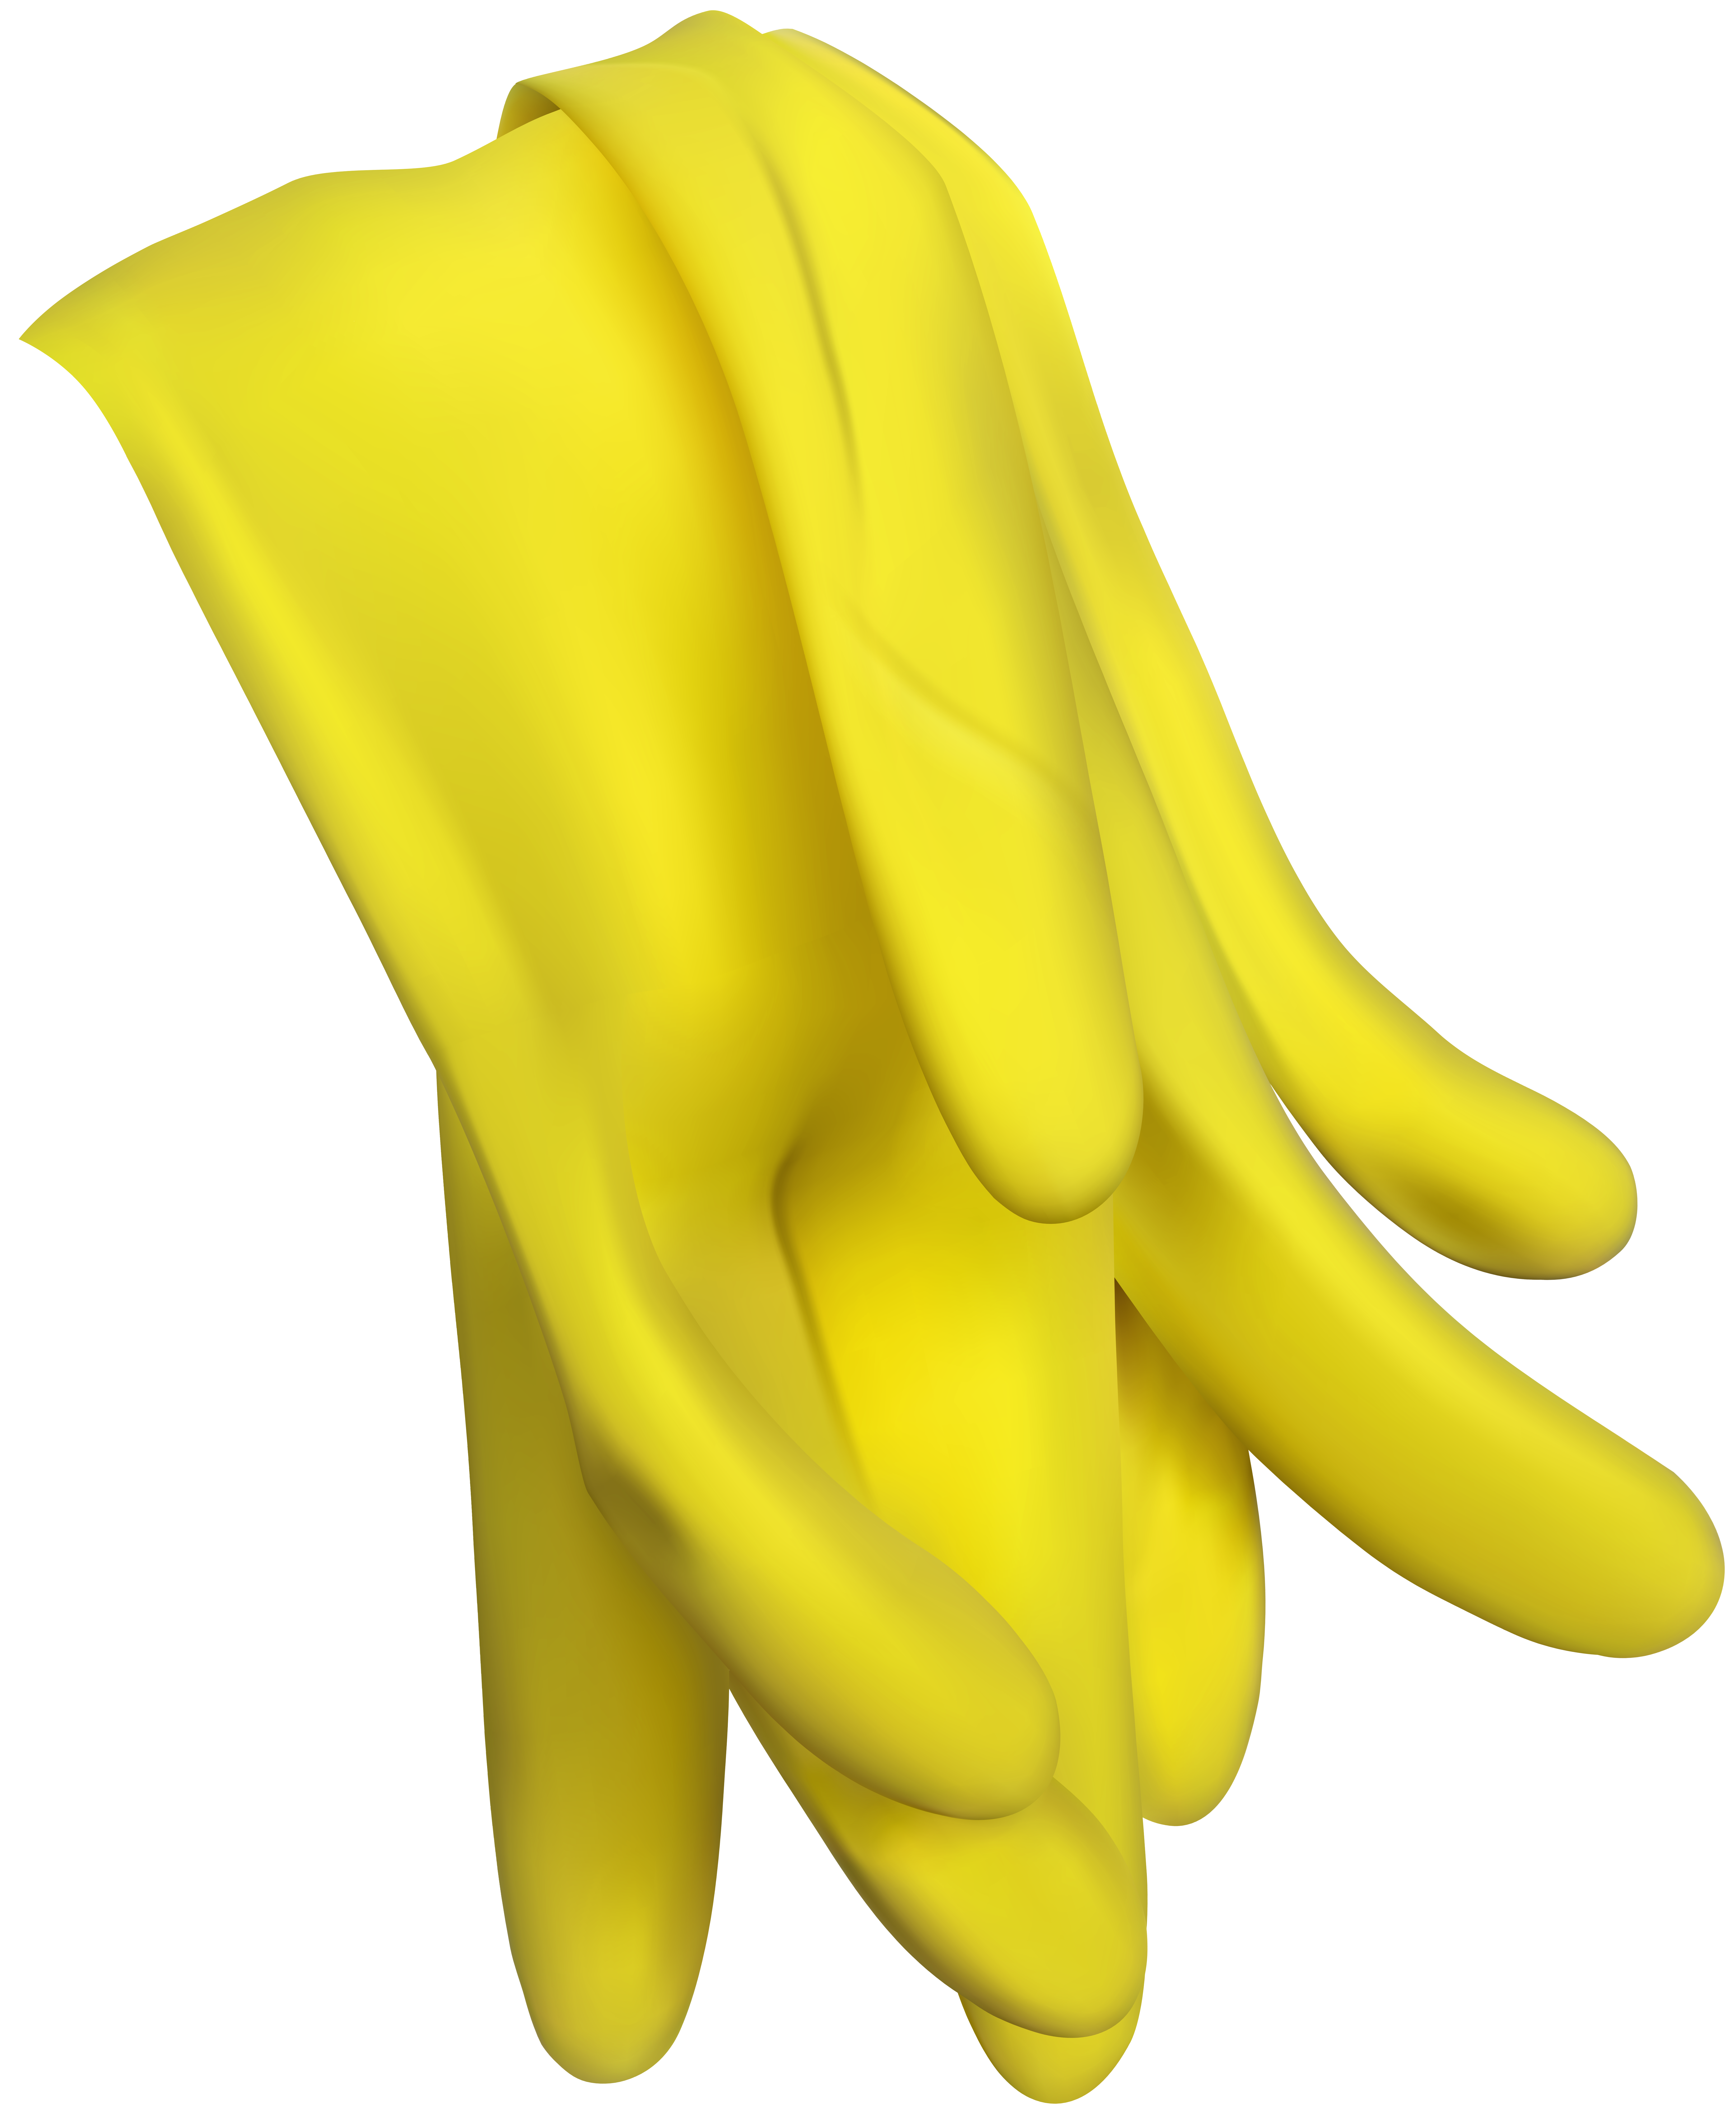 gloves clip art